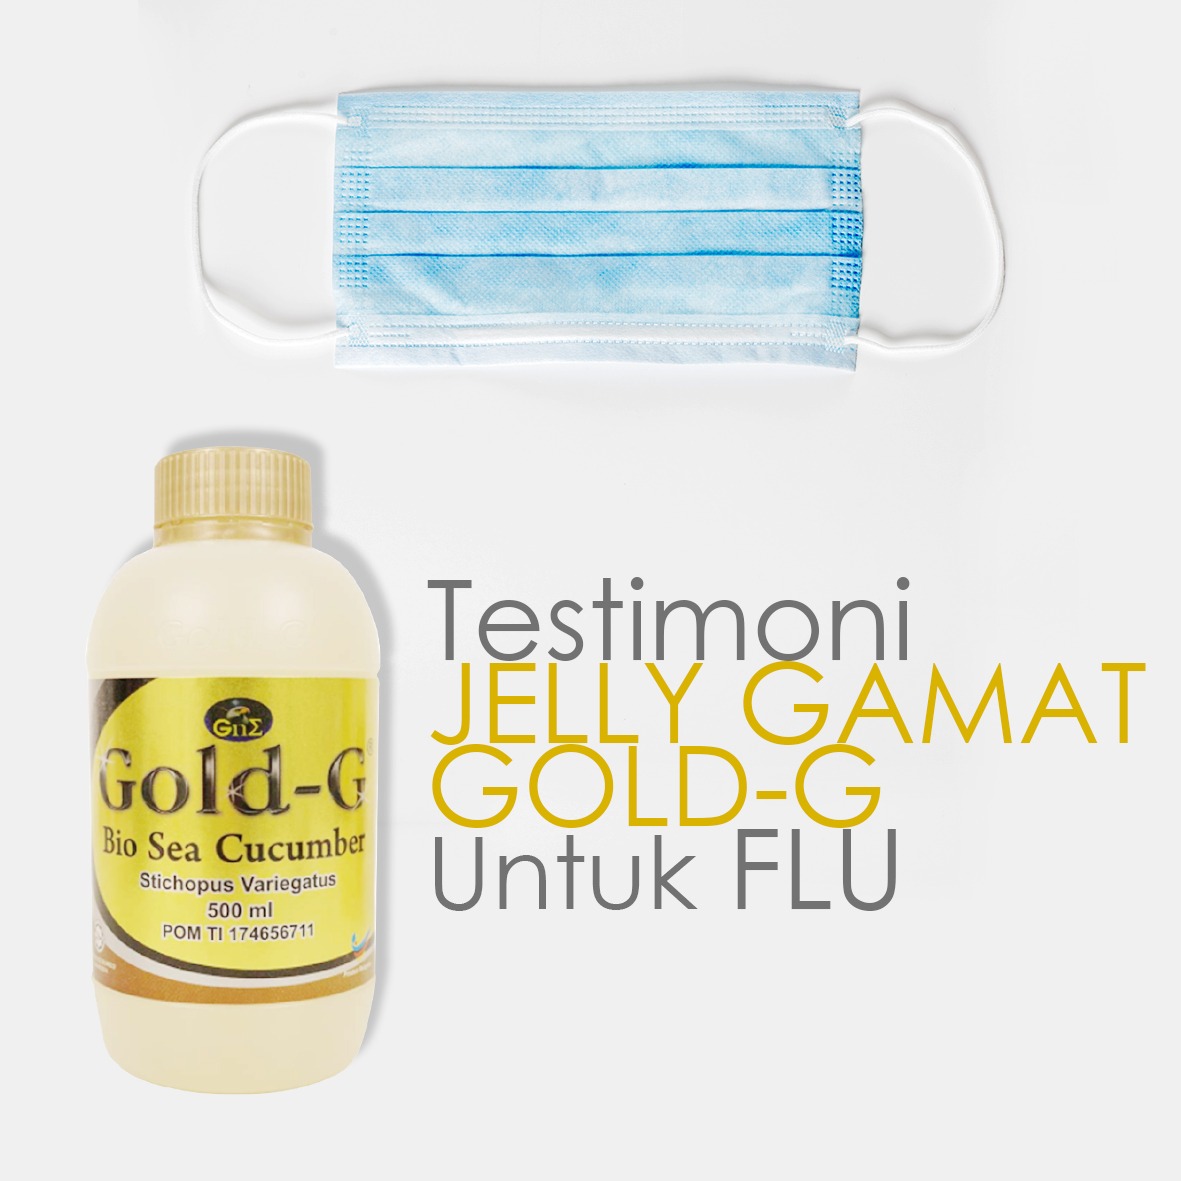 Testimoni Jelly Gamat Gold G Untuk Flu